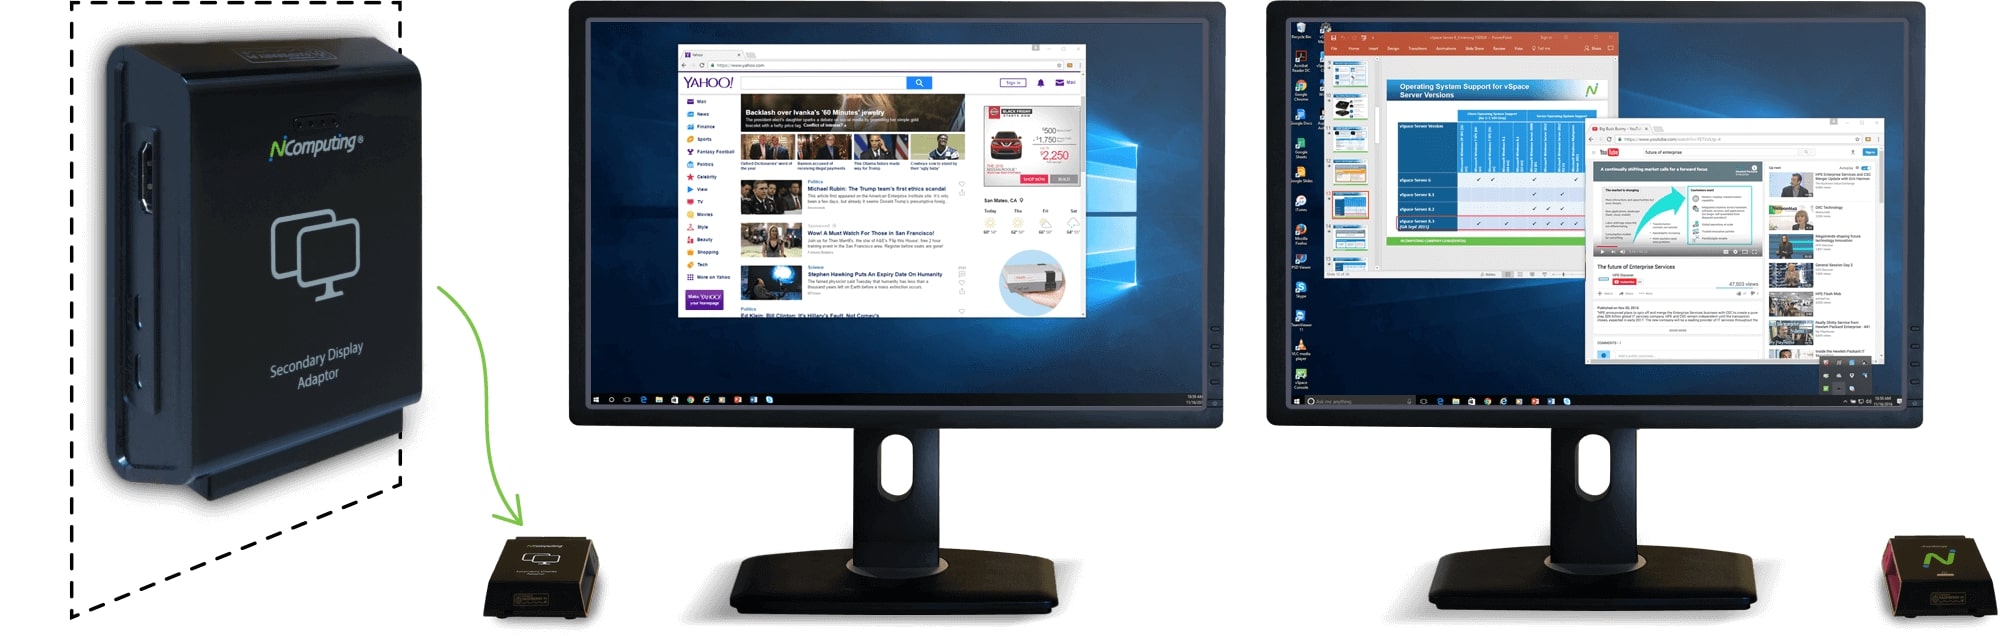 NComputing RX300 dual monitor display capability feature